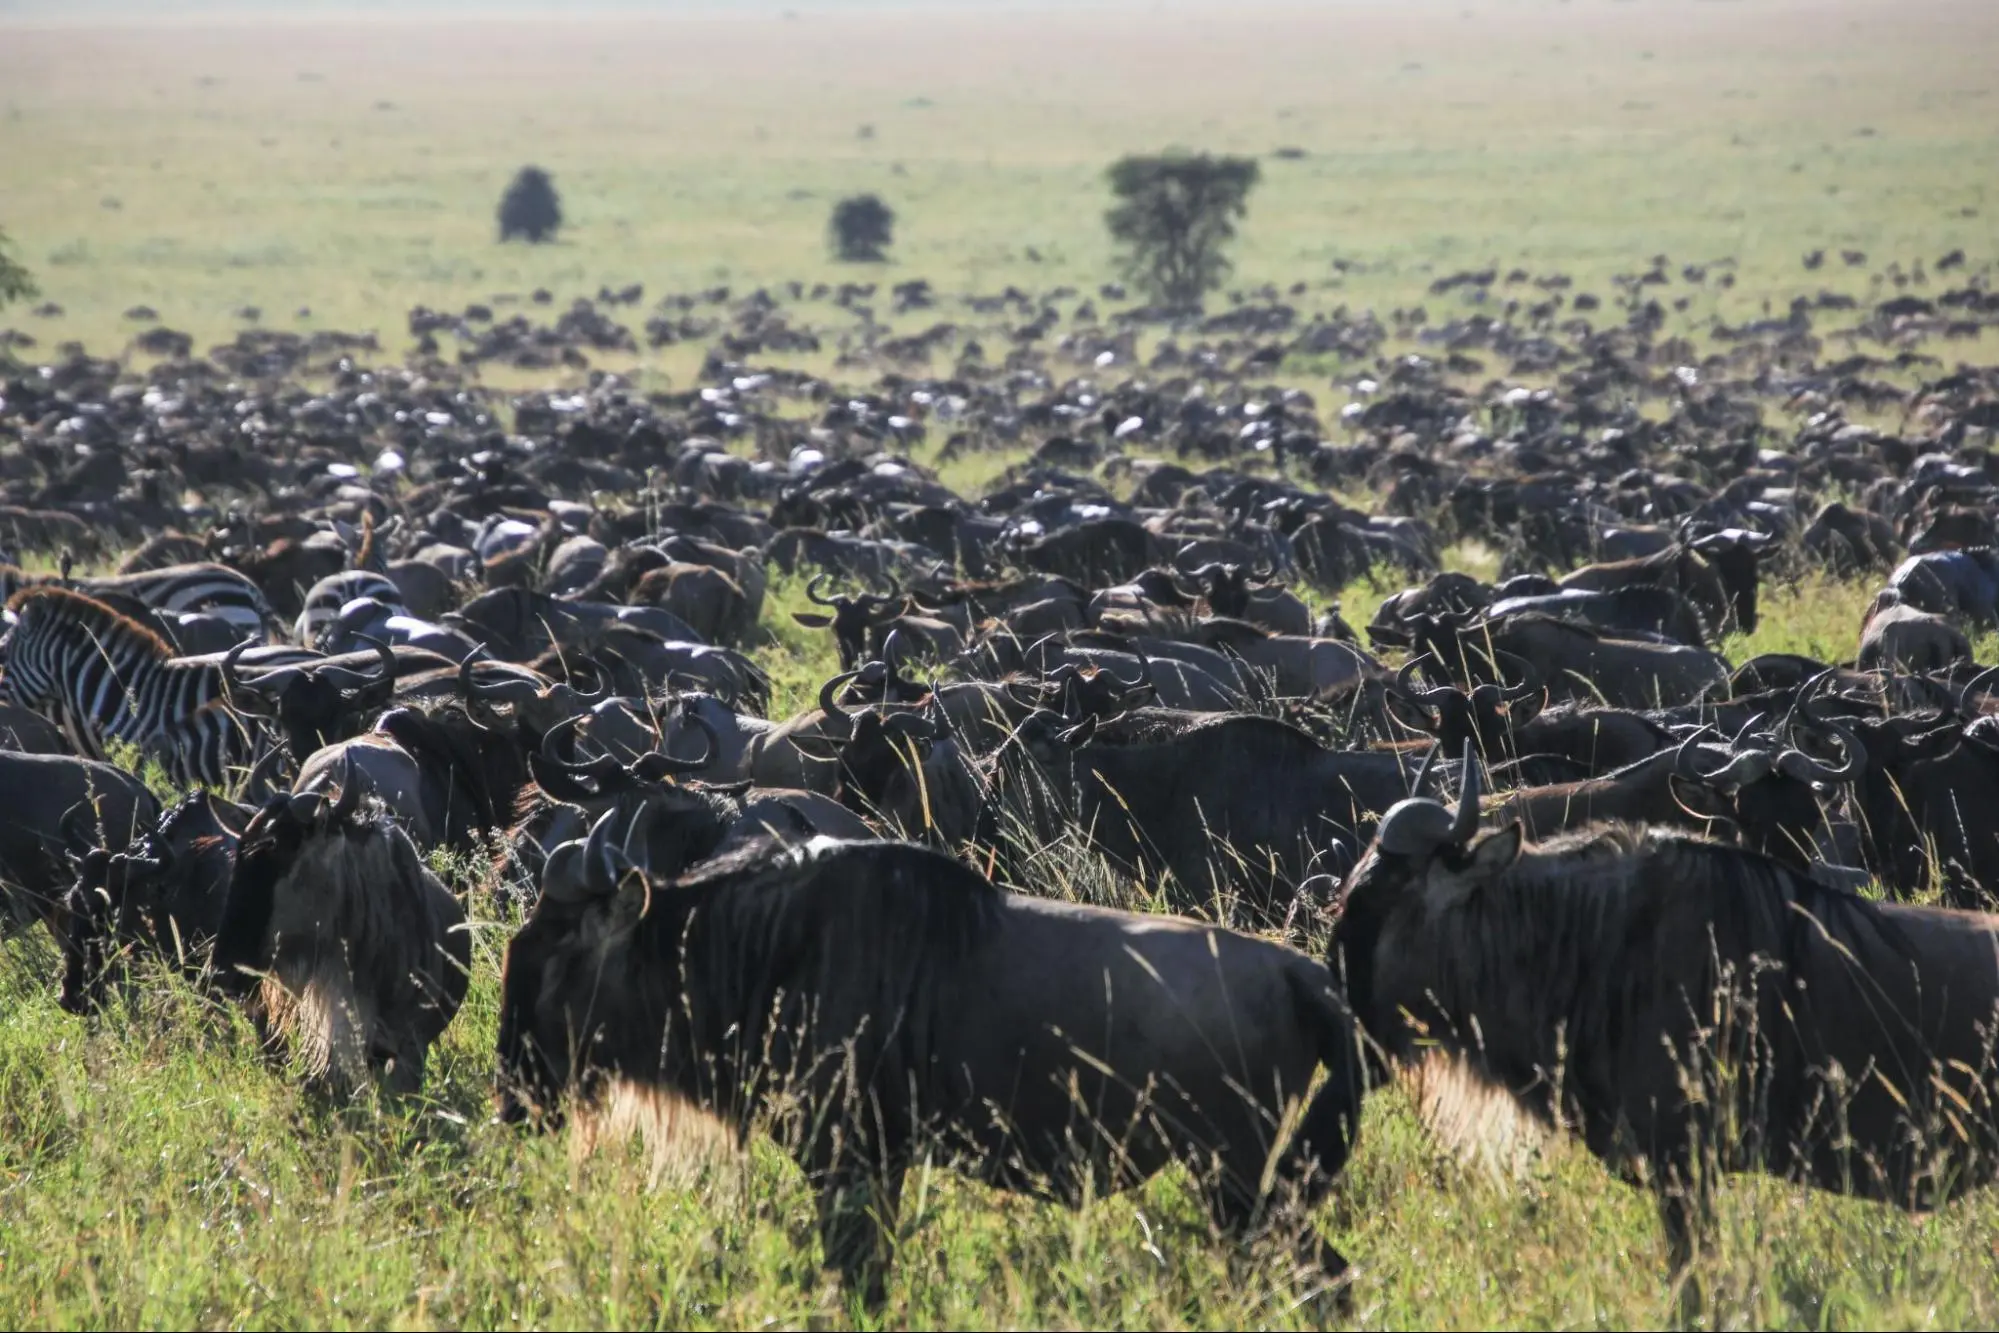 A breathtaking sight of a massive wildebeest herd in the Serengeti, Tanzania. Witness the seasonal wonders